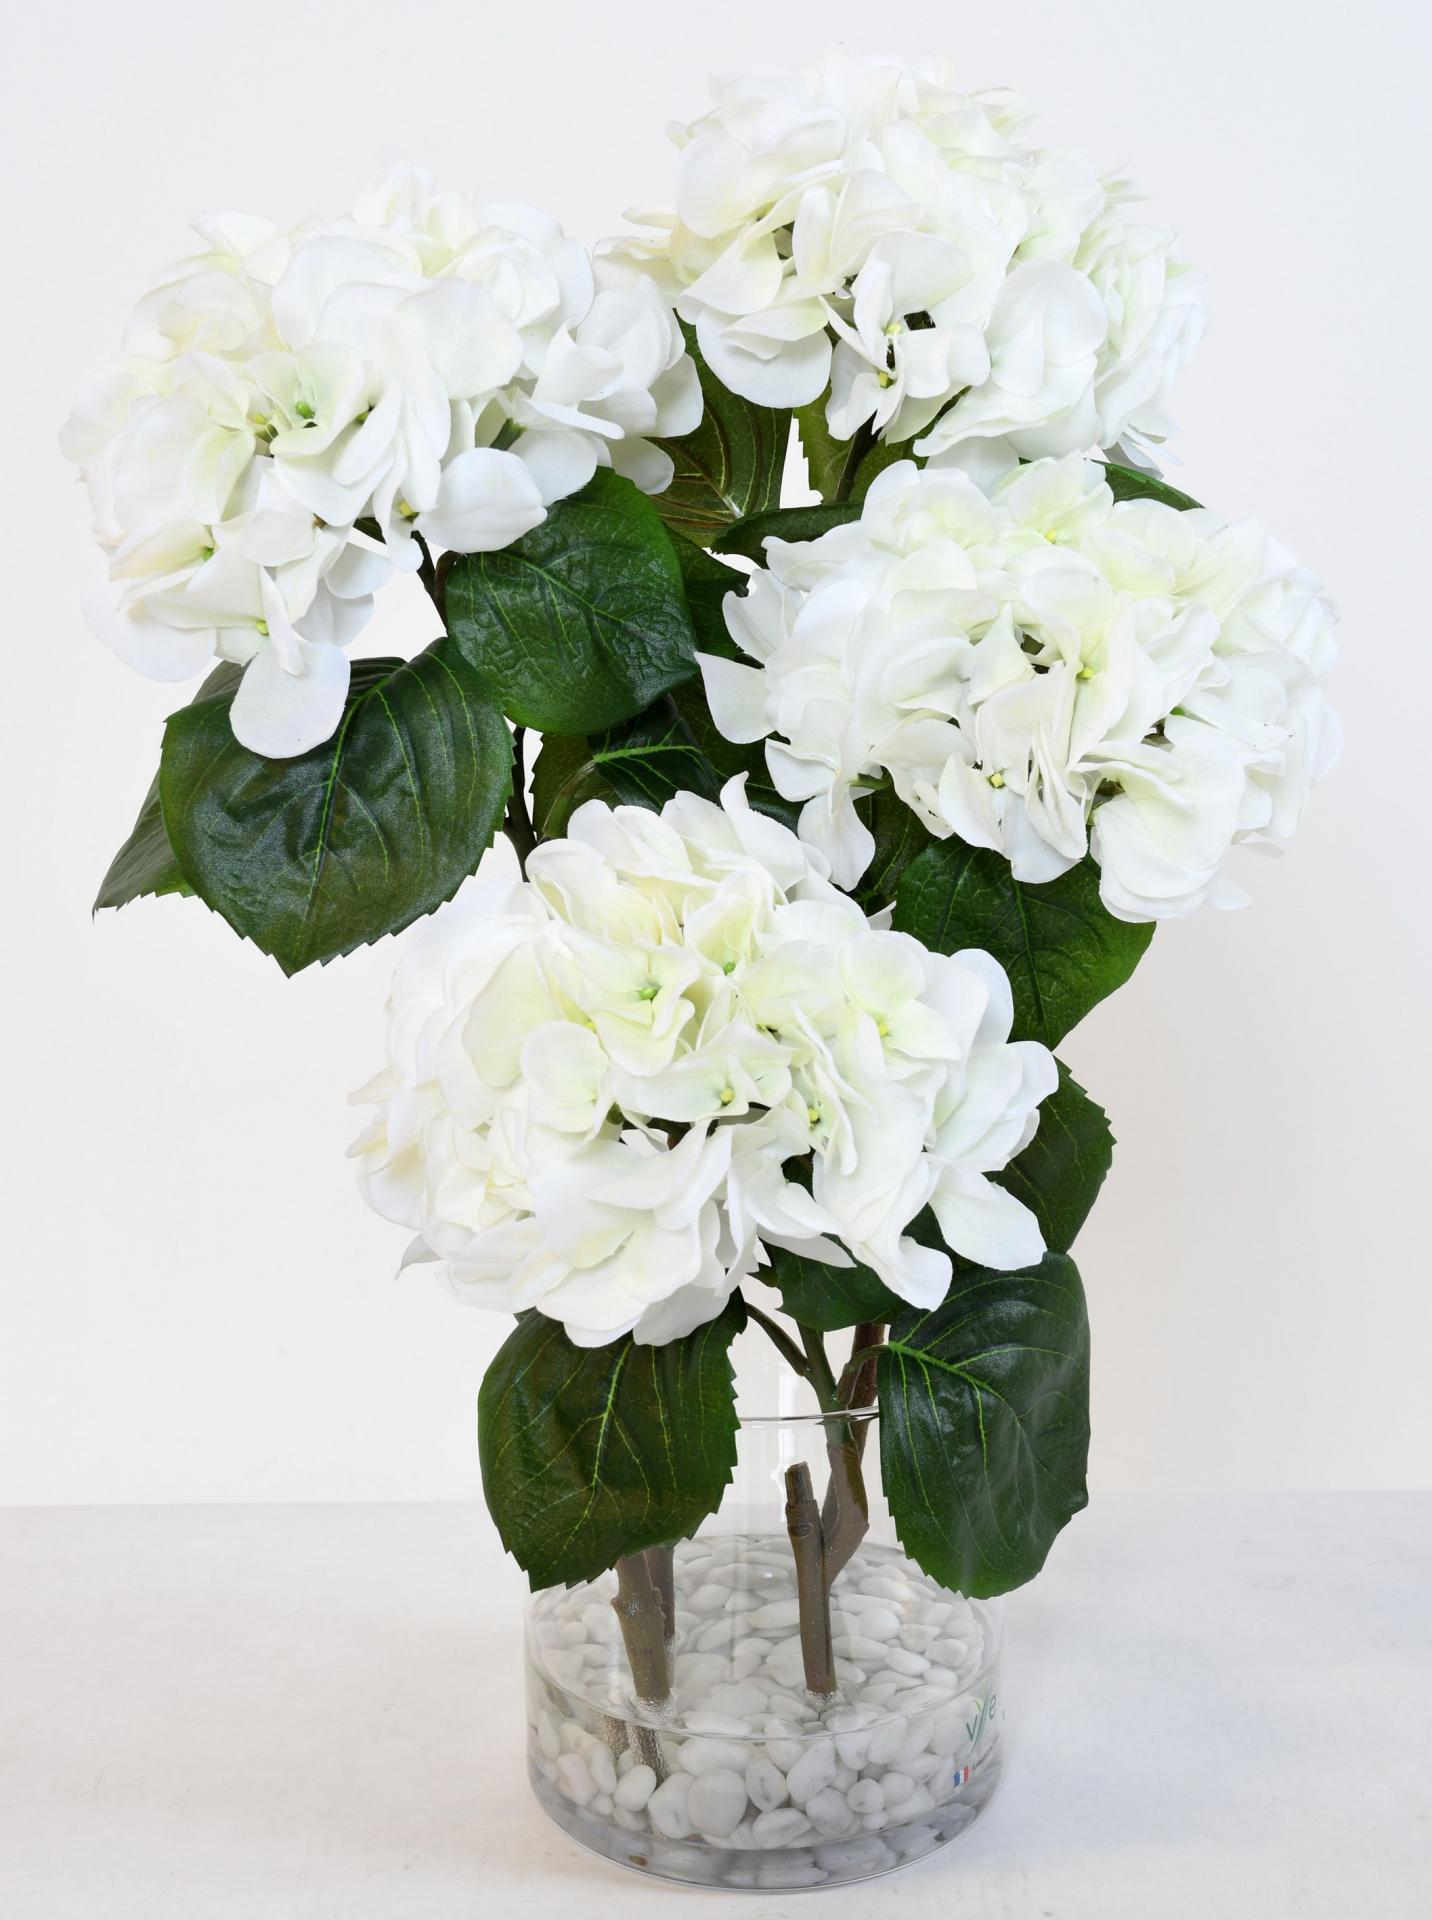 200bouquet hortensia blanc